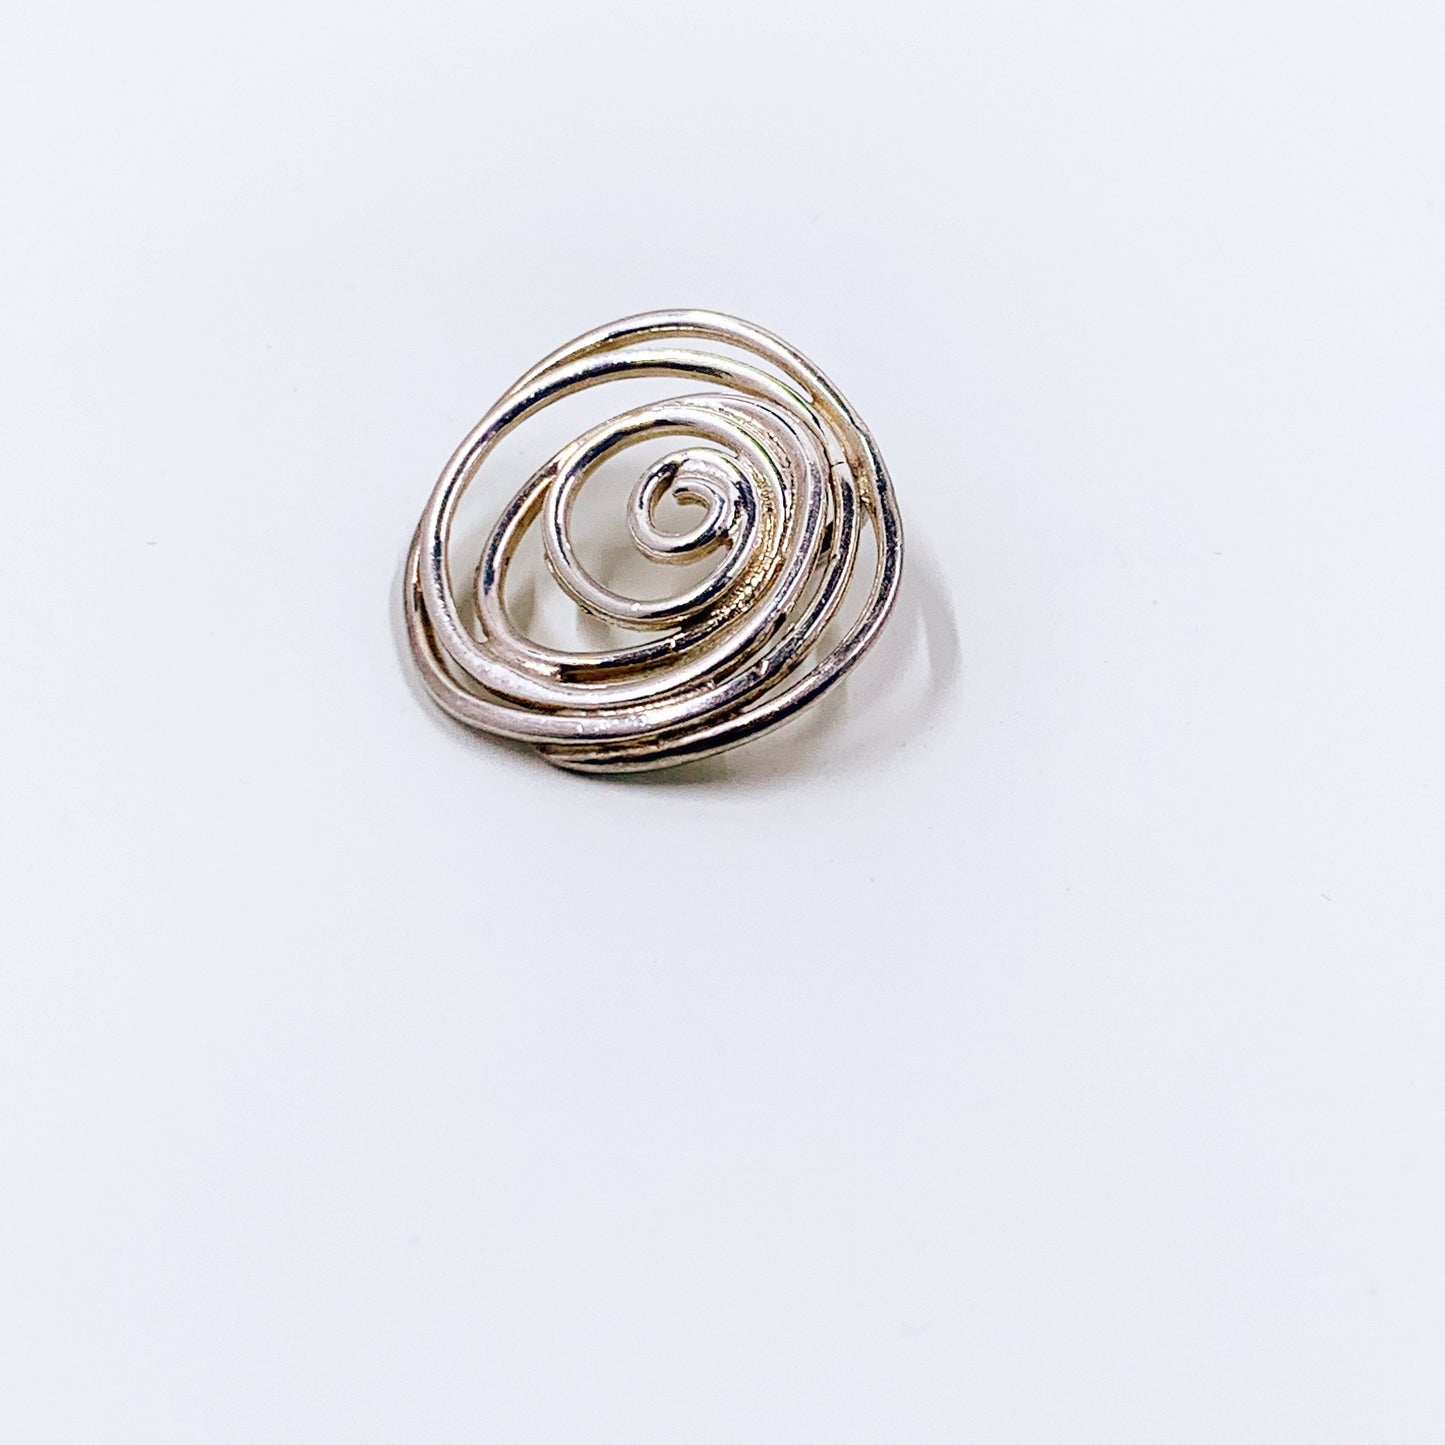 Vintage Silver Modernist Wire Swirl Pendant | Geometric Swirl Design Pendant